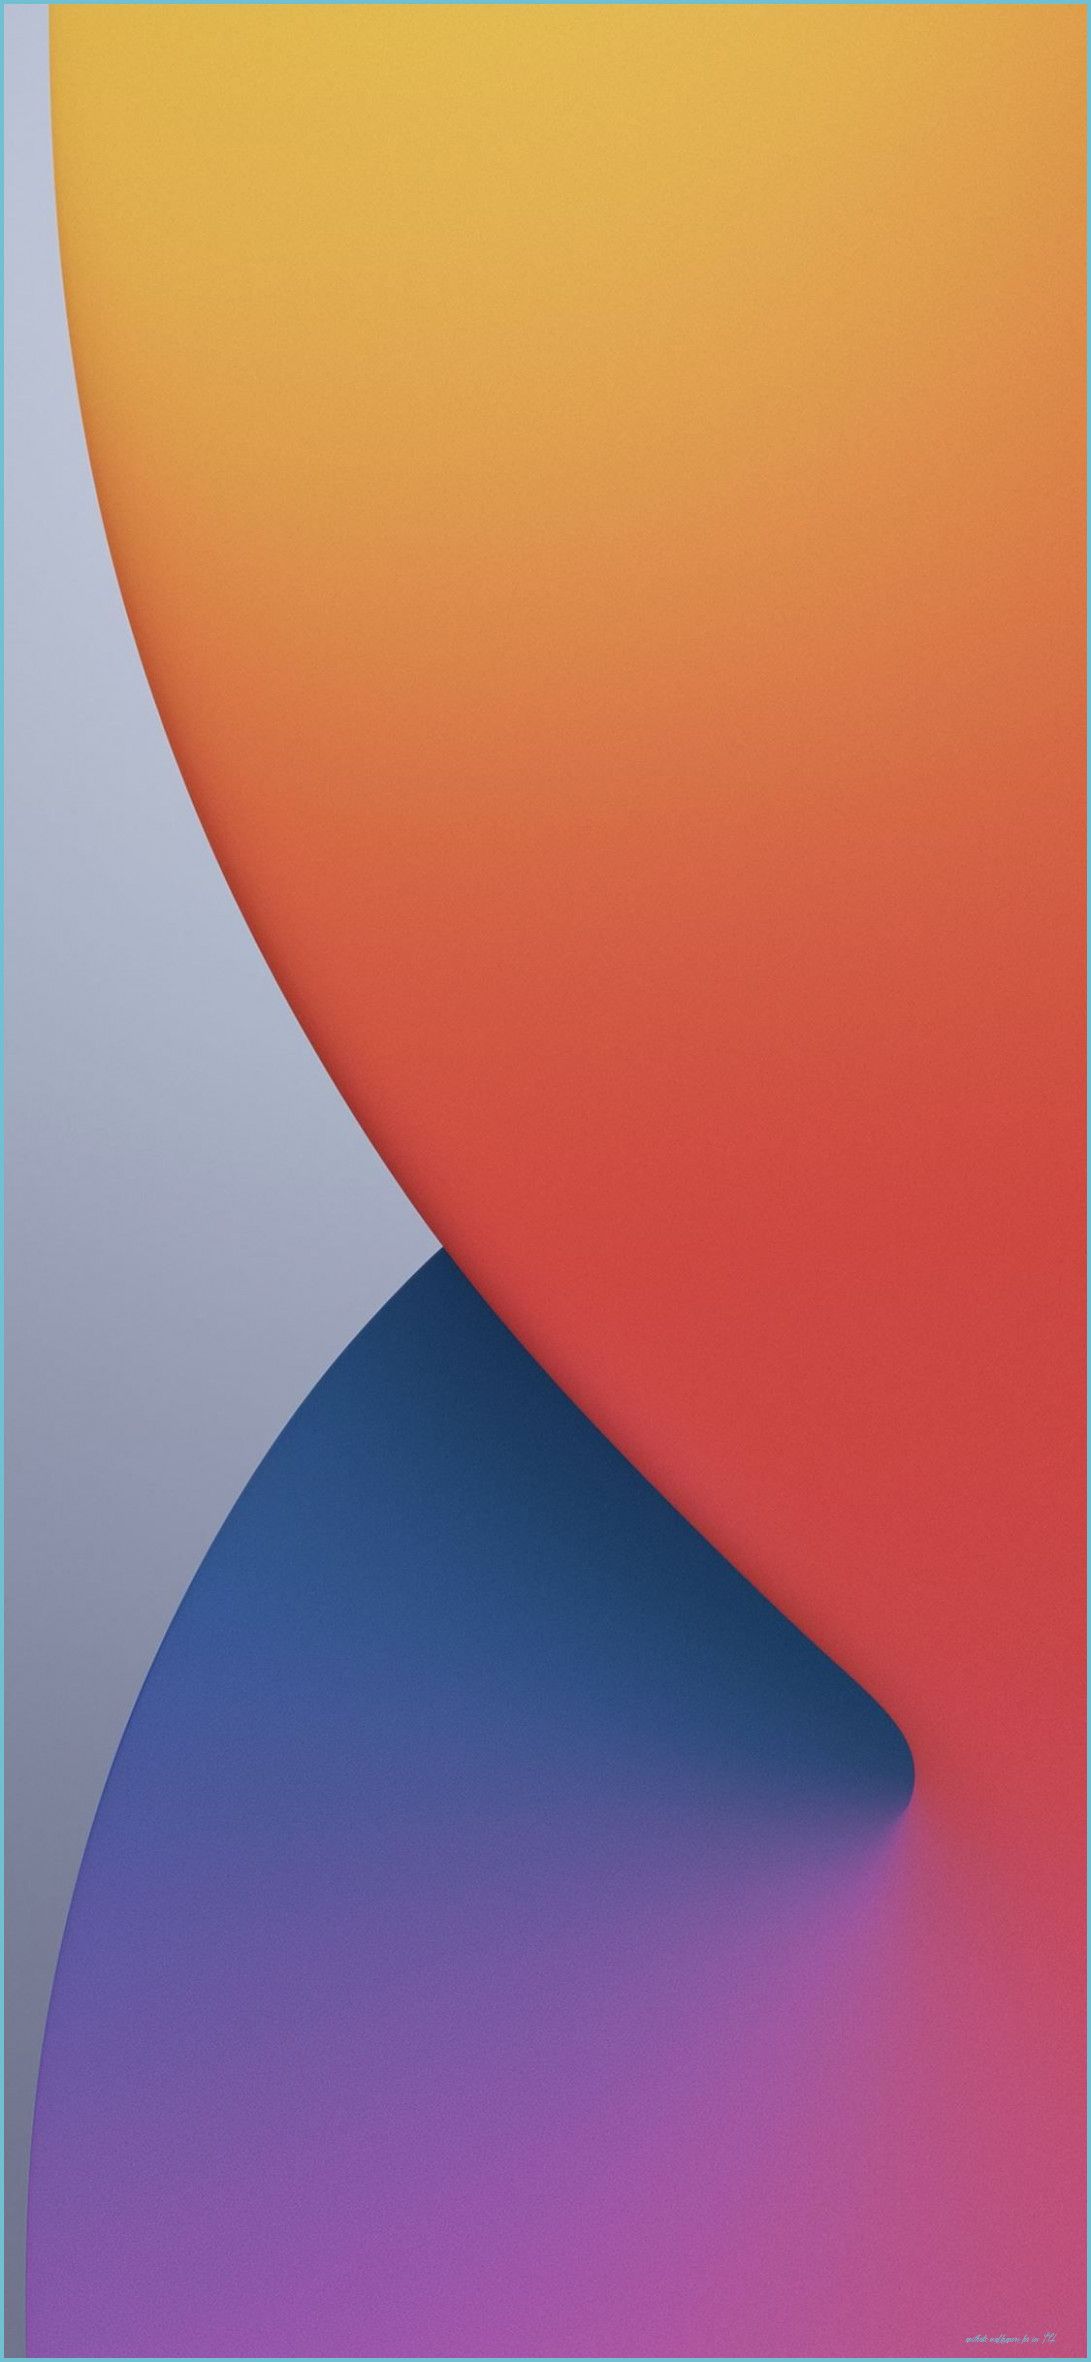 iOS 12 stock wallpaper Warm Light #iOS12stockwallpaper #WWDC12 wallpaper for ios 14